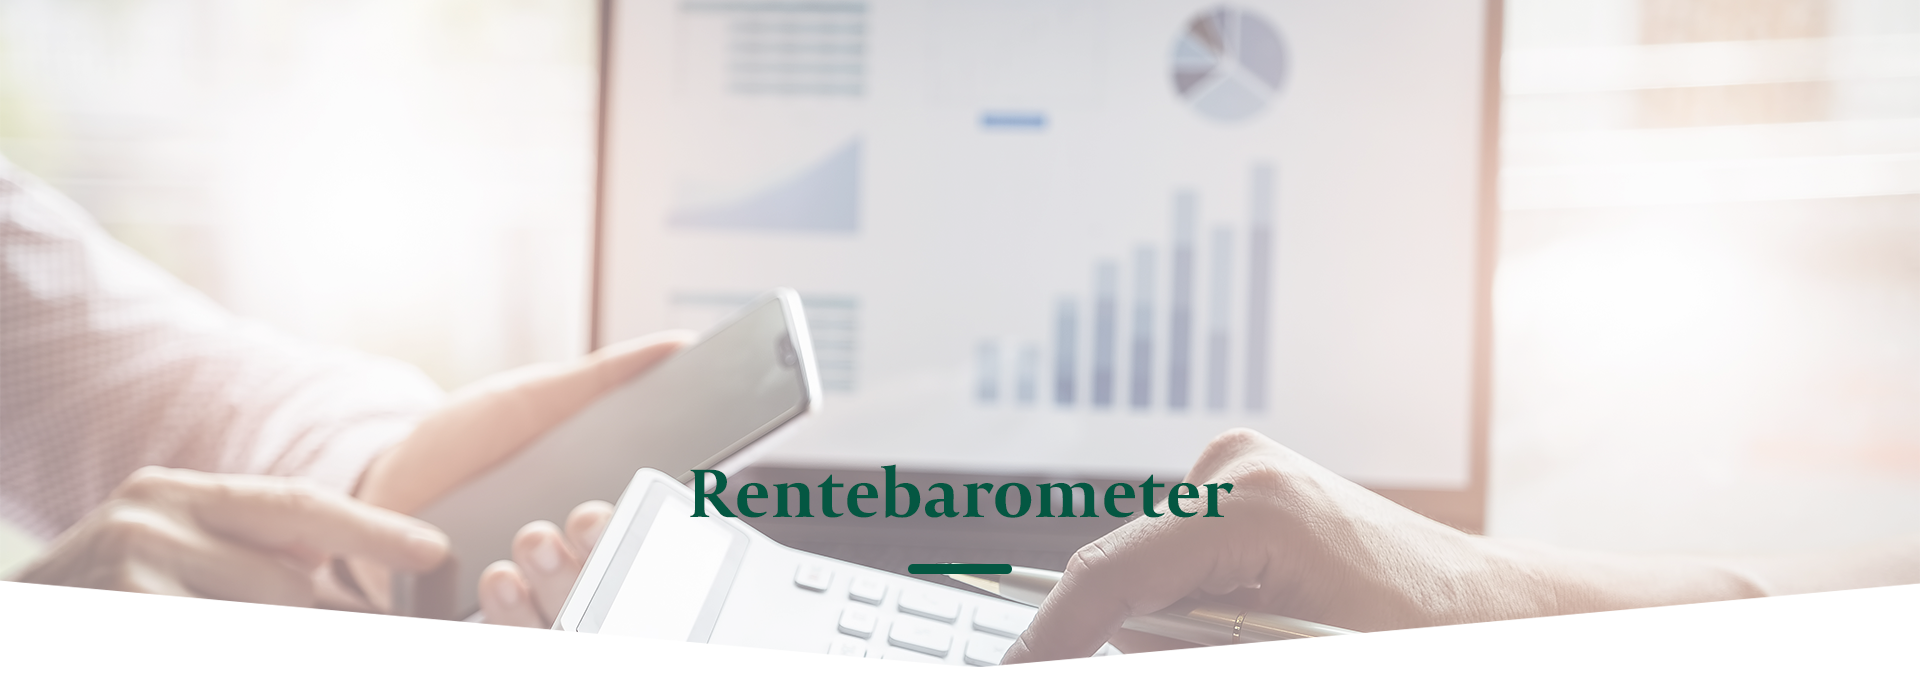 Rentebarometer - Hillewaere Hypotheken